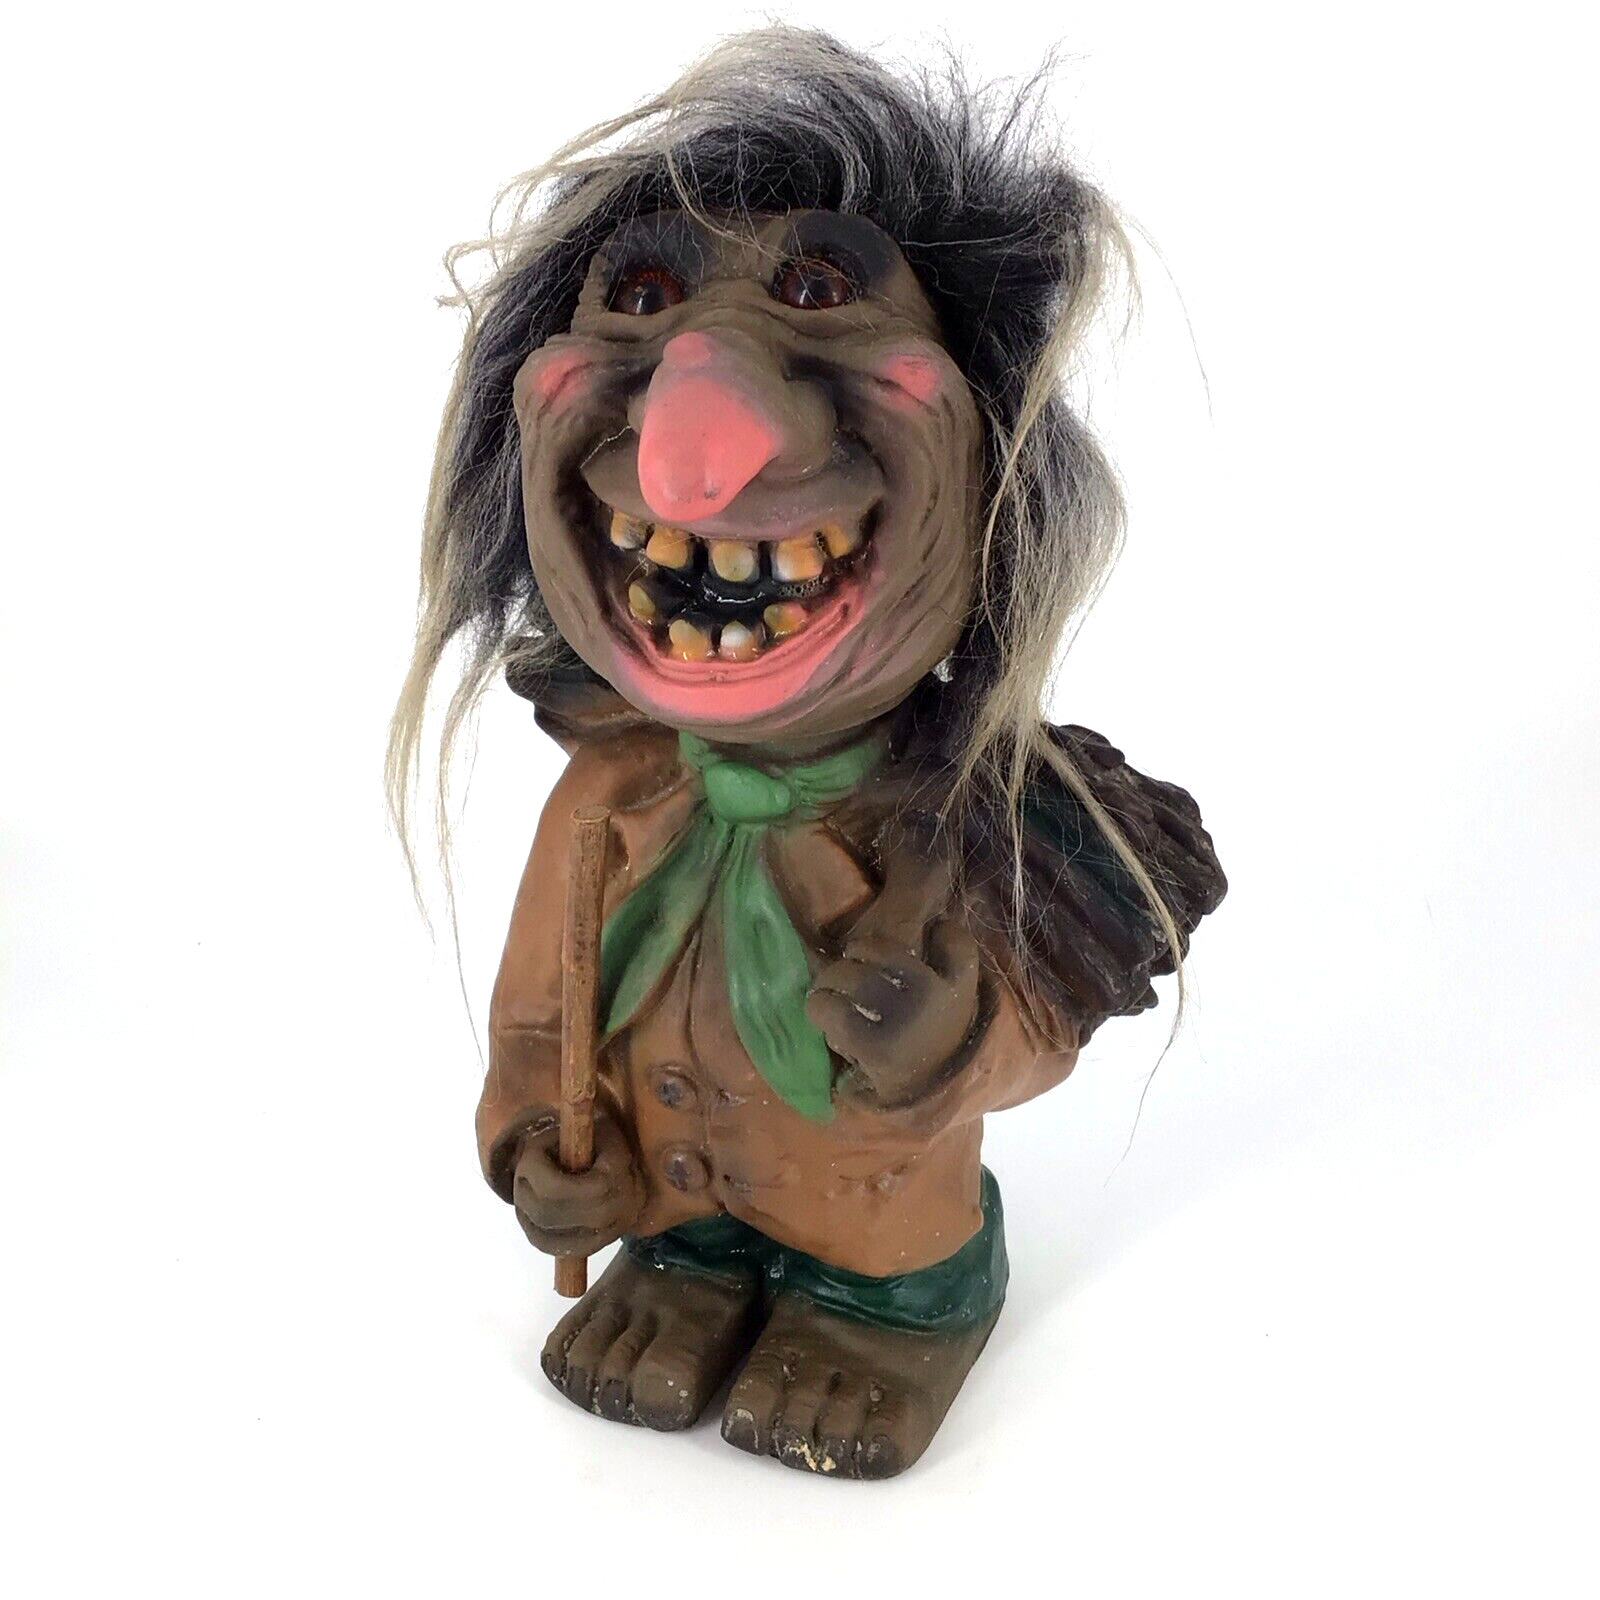 Vintage 1960's HEICO West Germany Nodder Bobble Head Troll Figure - Rare